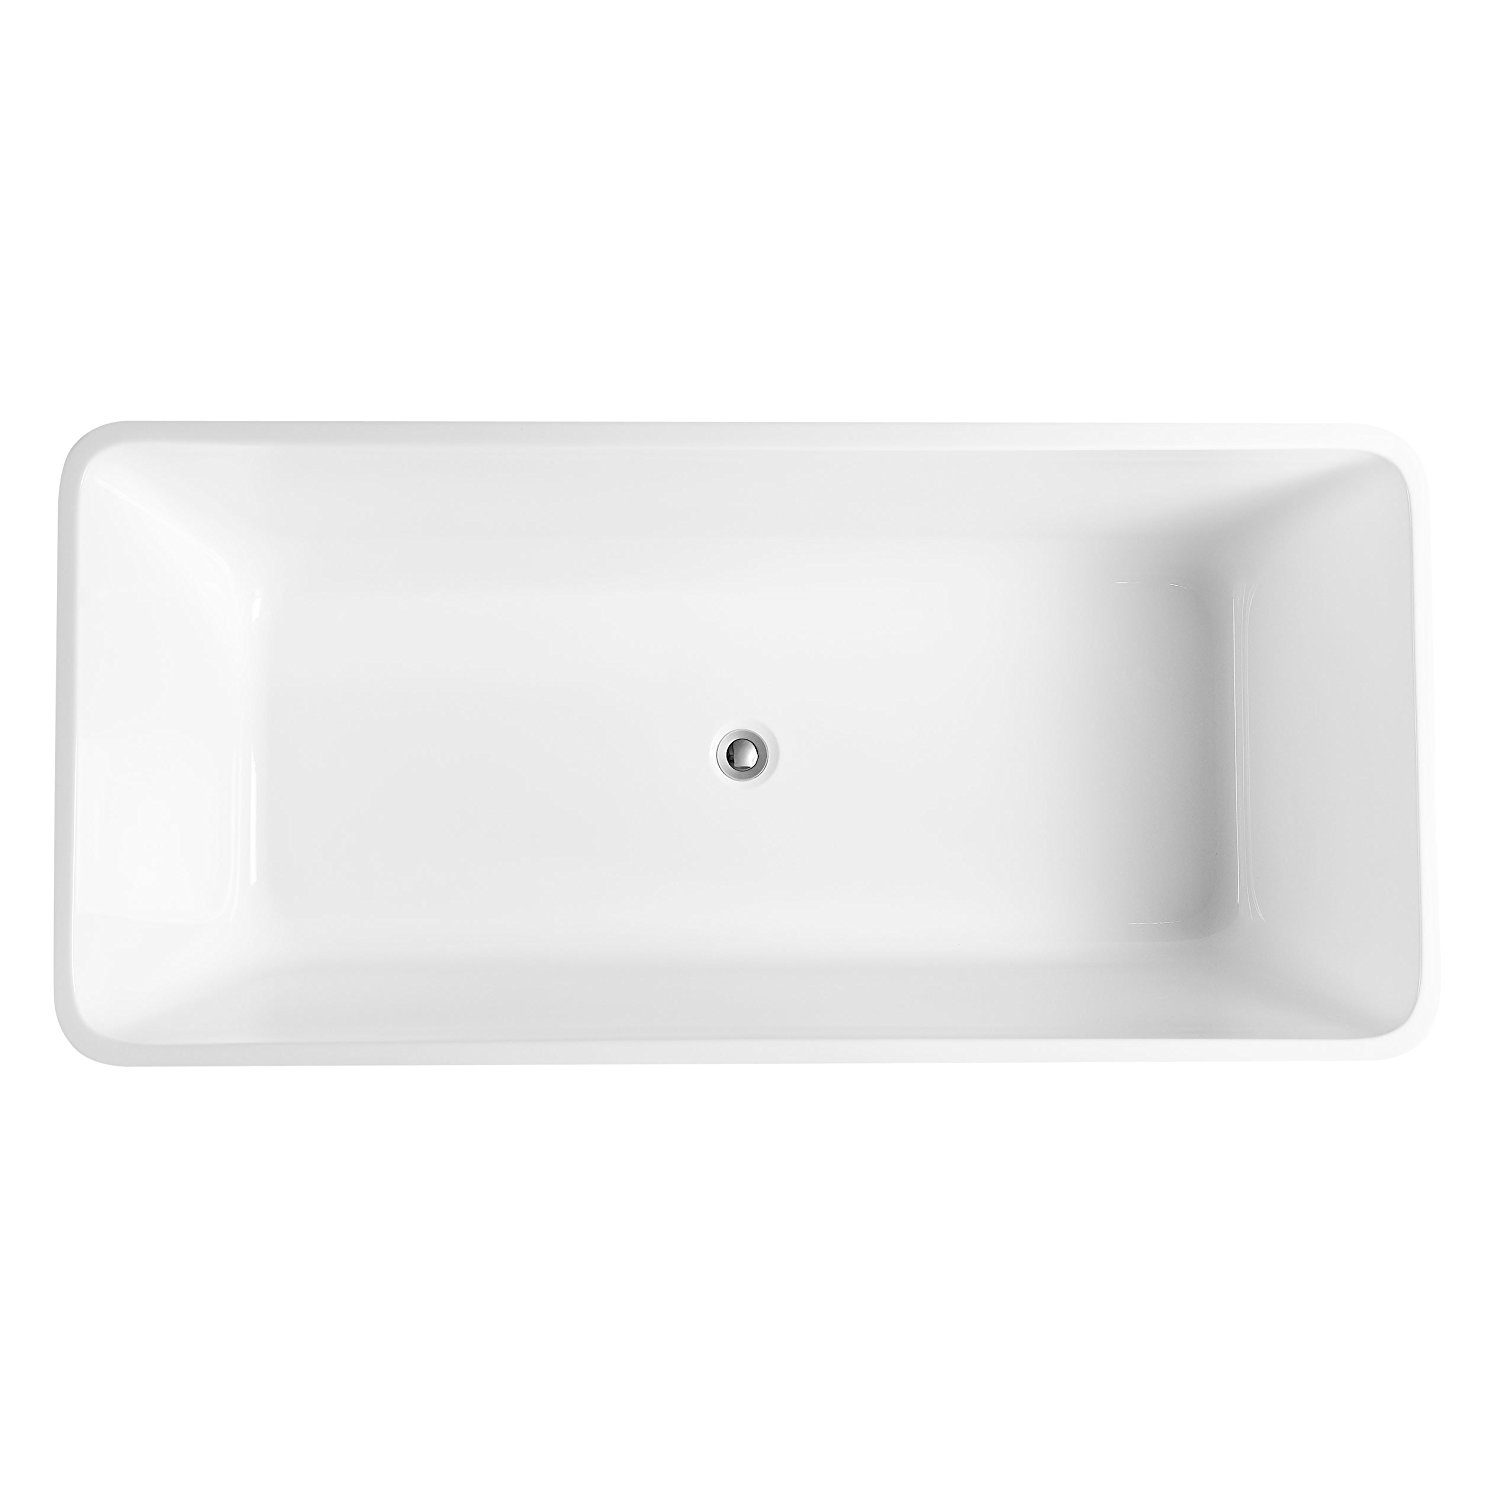 1500*750*580 Small Insulated Acrylic Bathtub